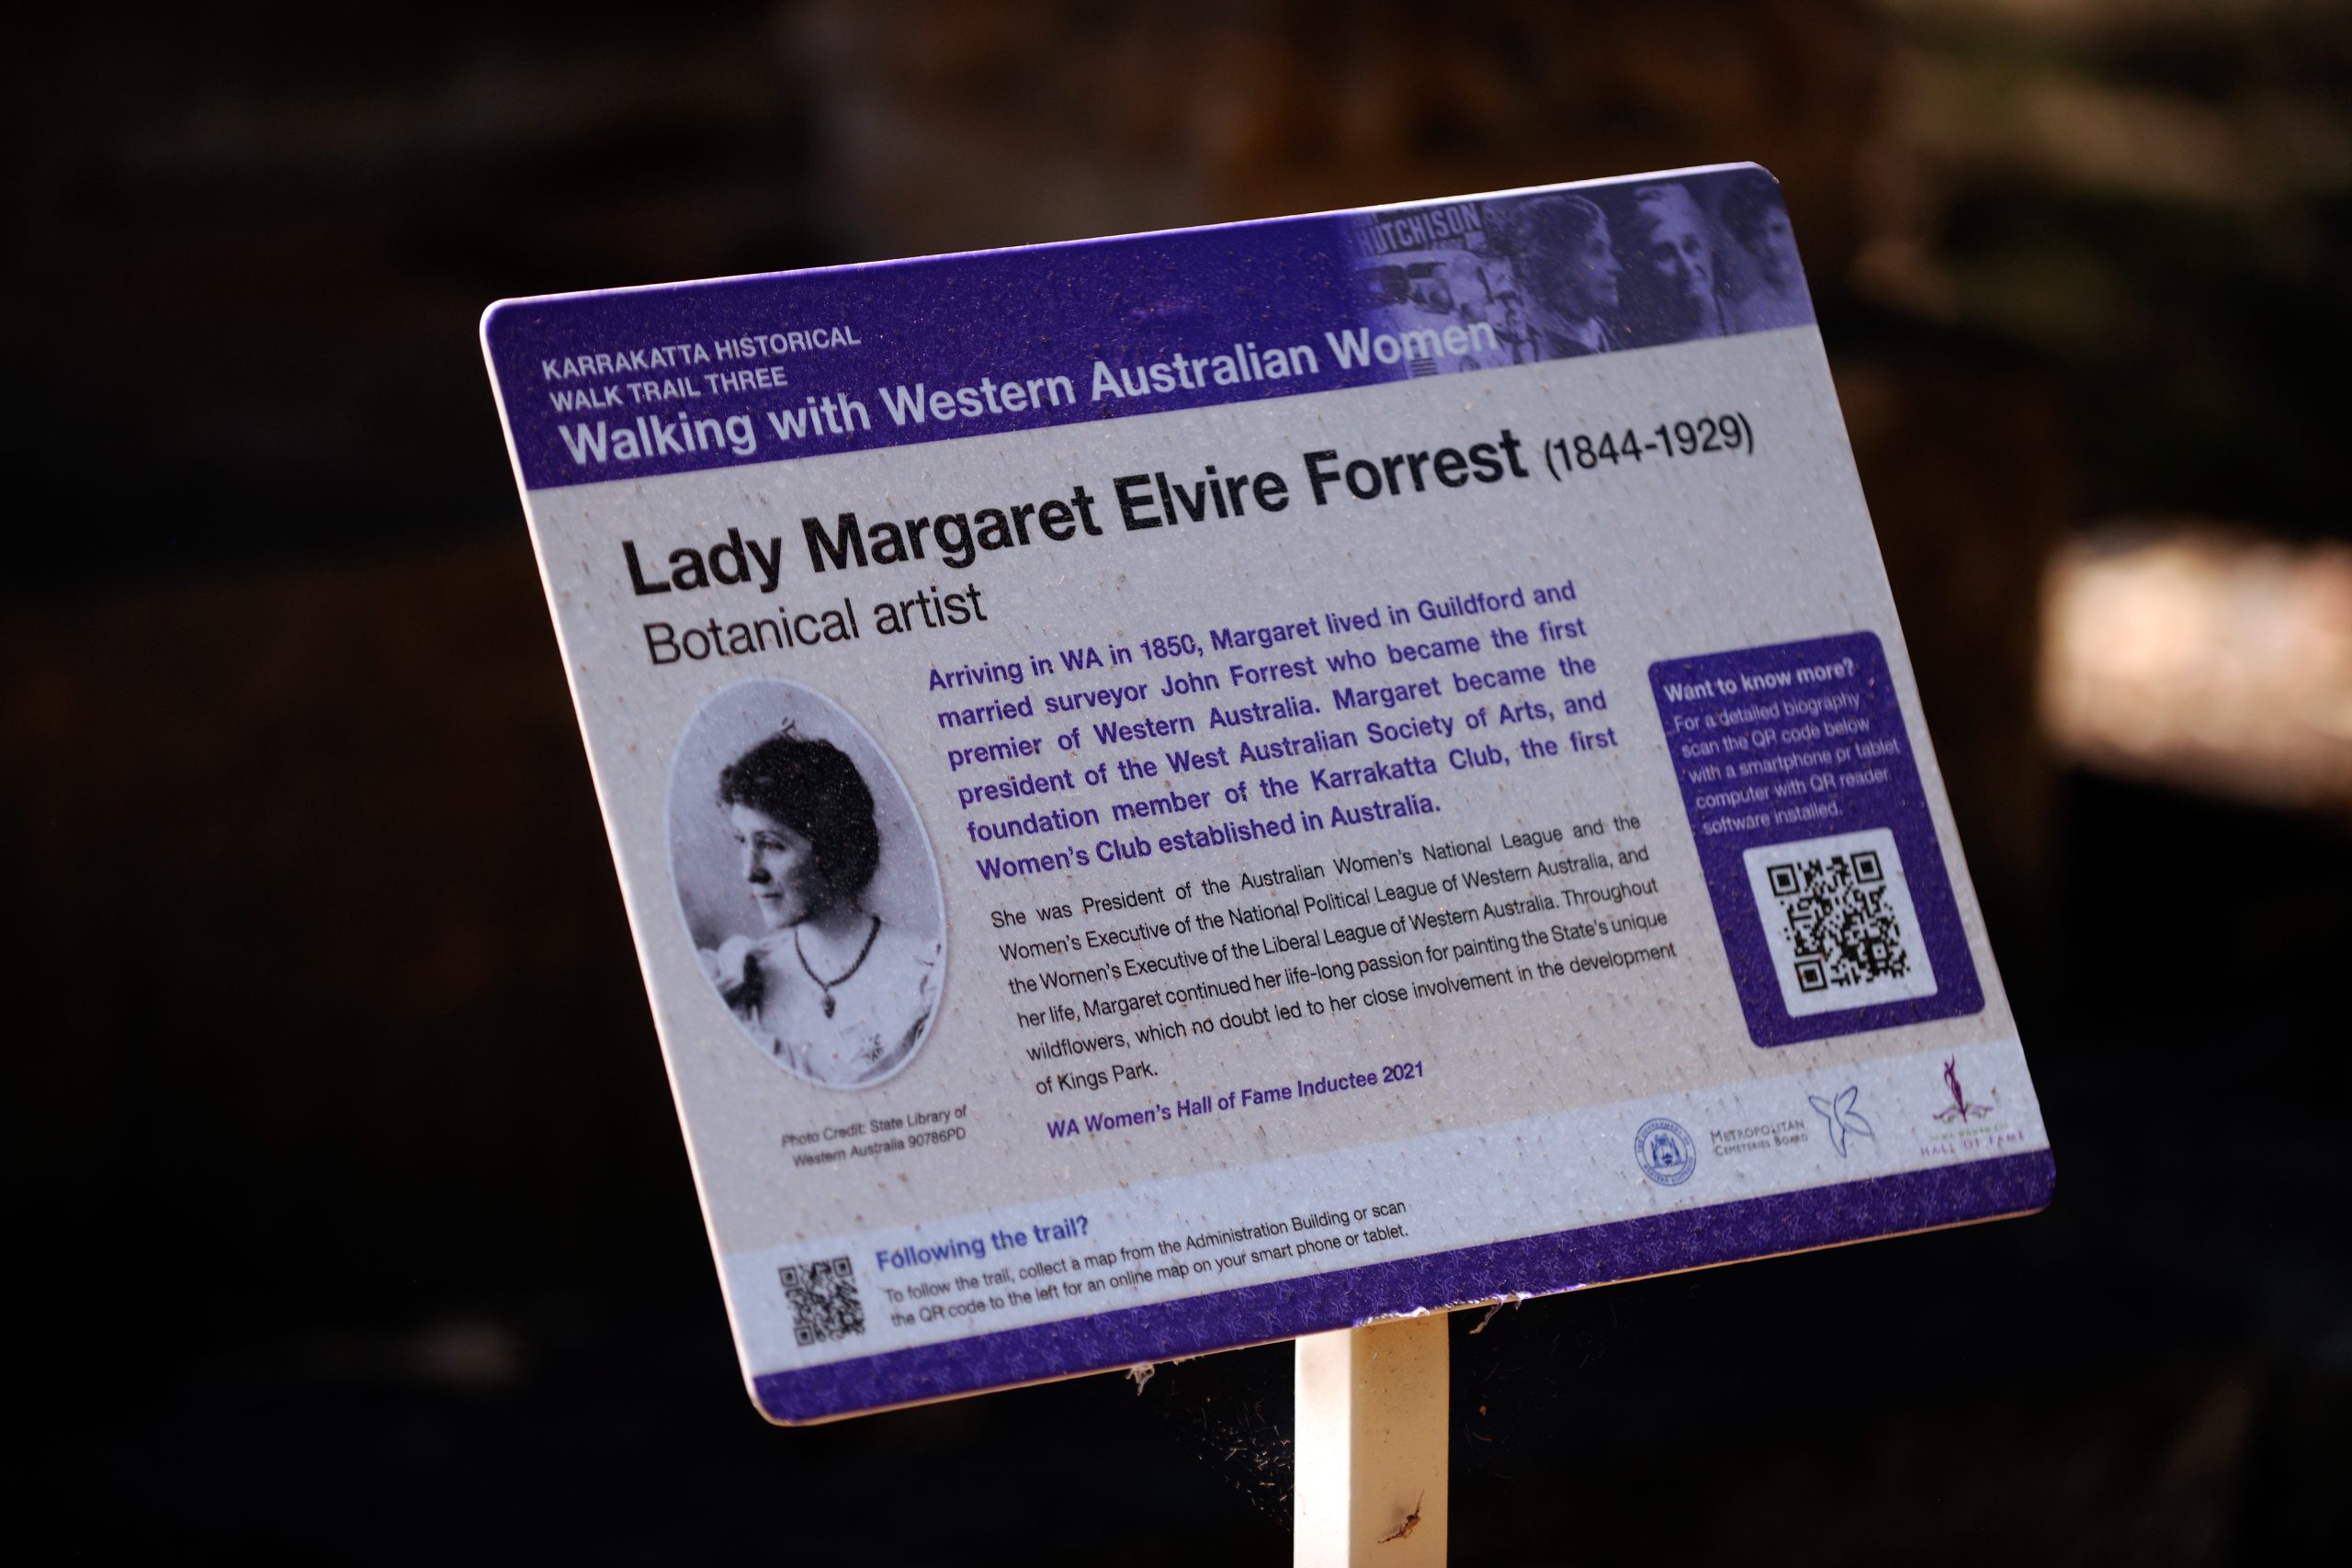 the sign post of Lady Margaret Elvire Forrest on Walking with Western Australian Women walk trail at Karrakatta Cemetery